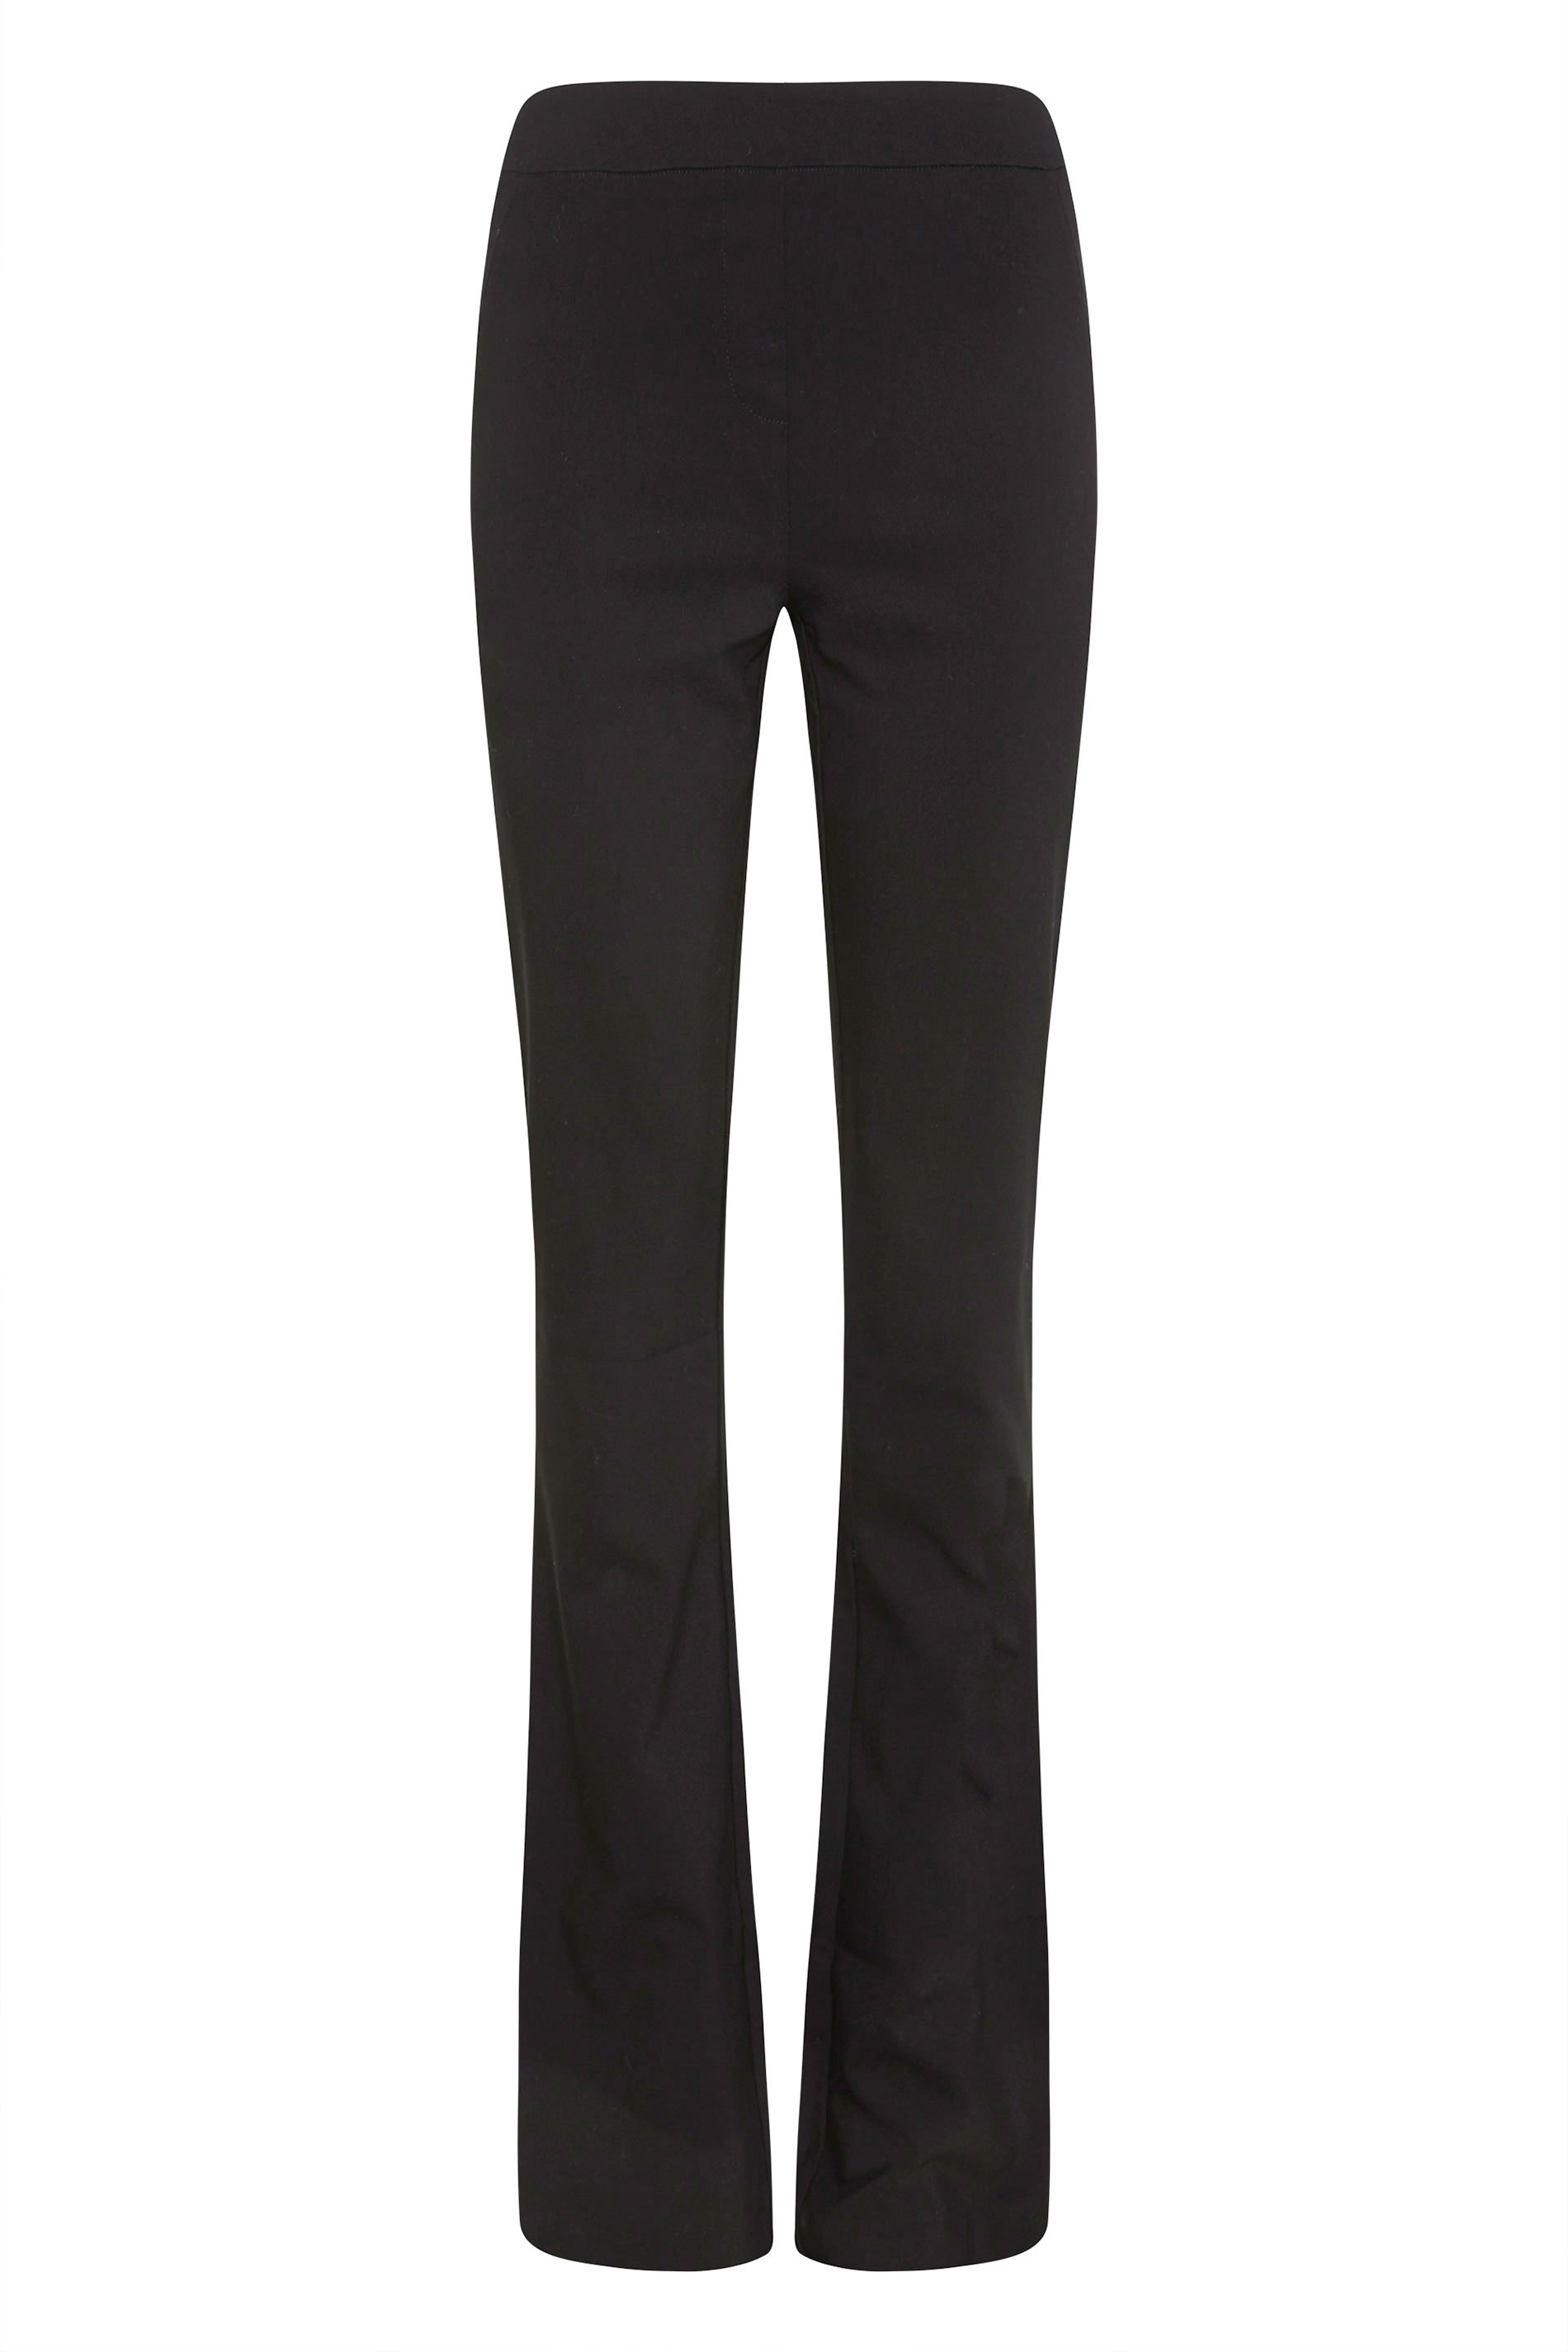 LTS Tall Women's Black Pinstripe Stretch Wide Leg Trousers